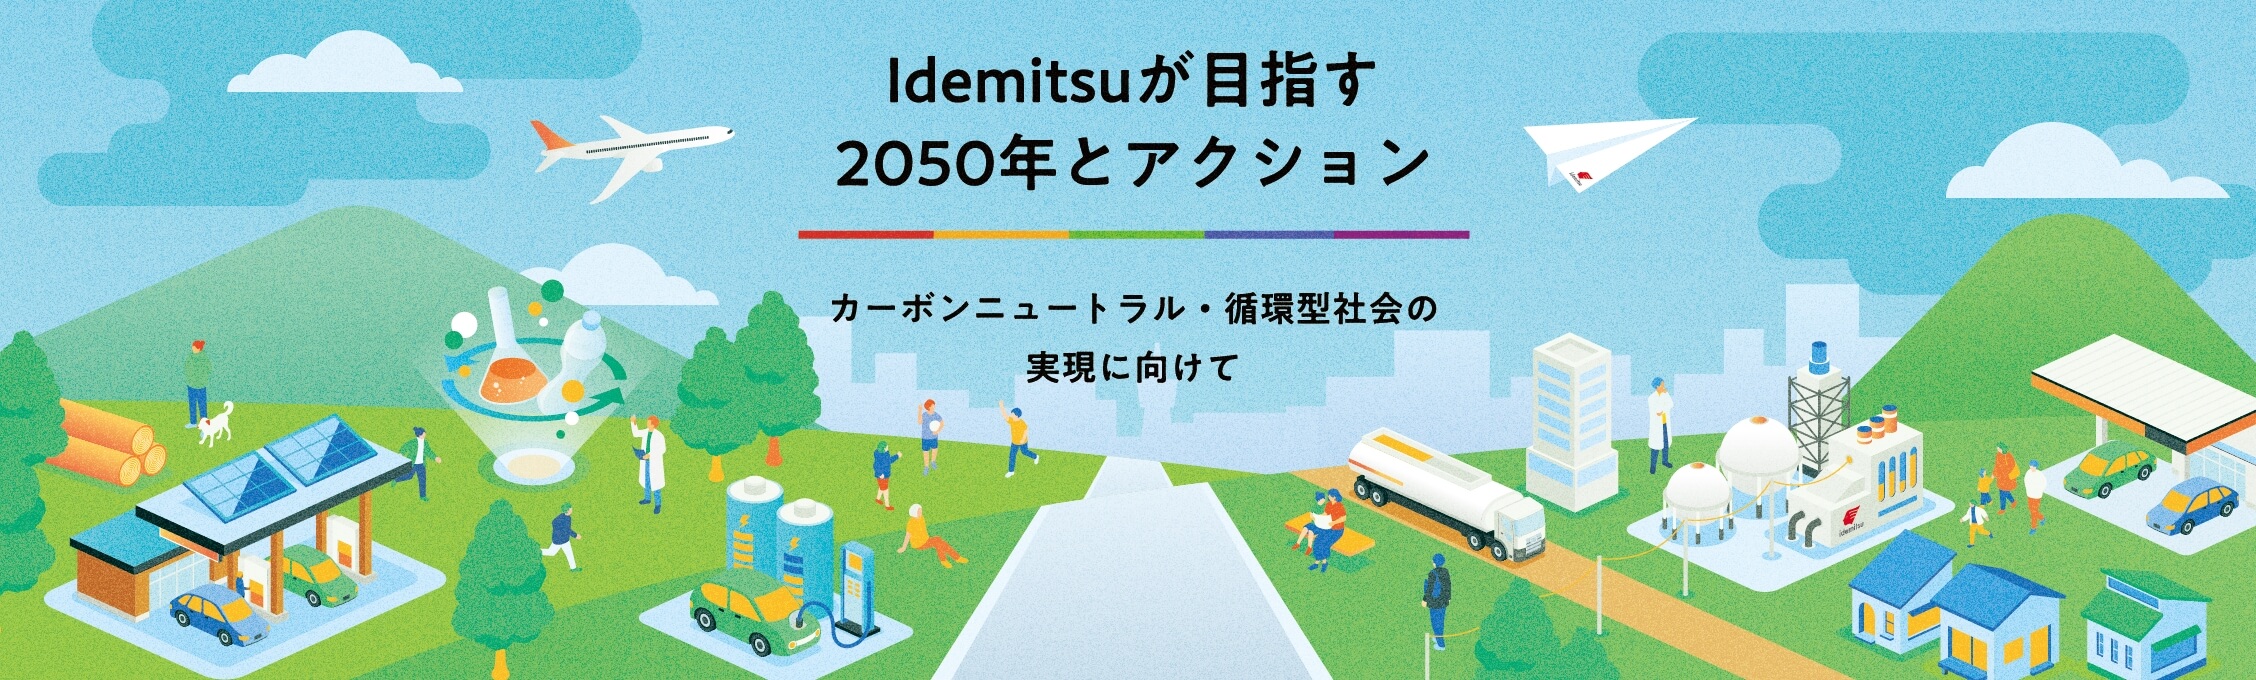 idemitsuが目指す2050年とアクション　カーボンニュートラル・循環型社会の実現に向けて